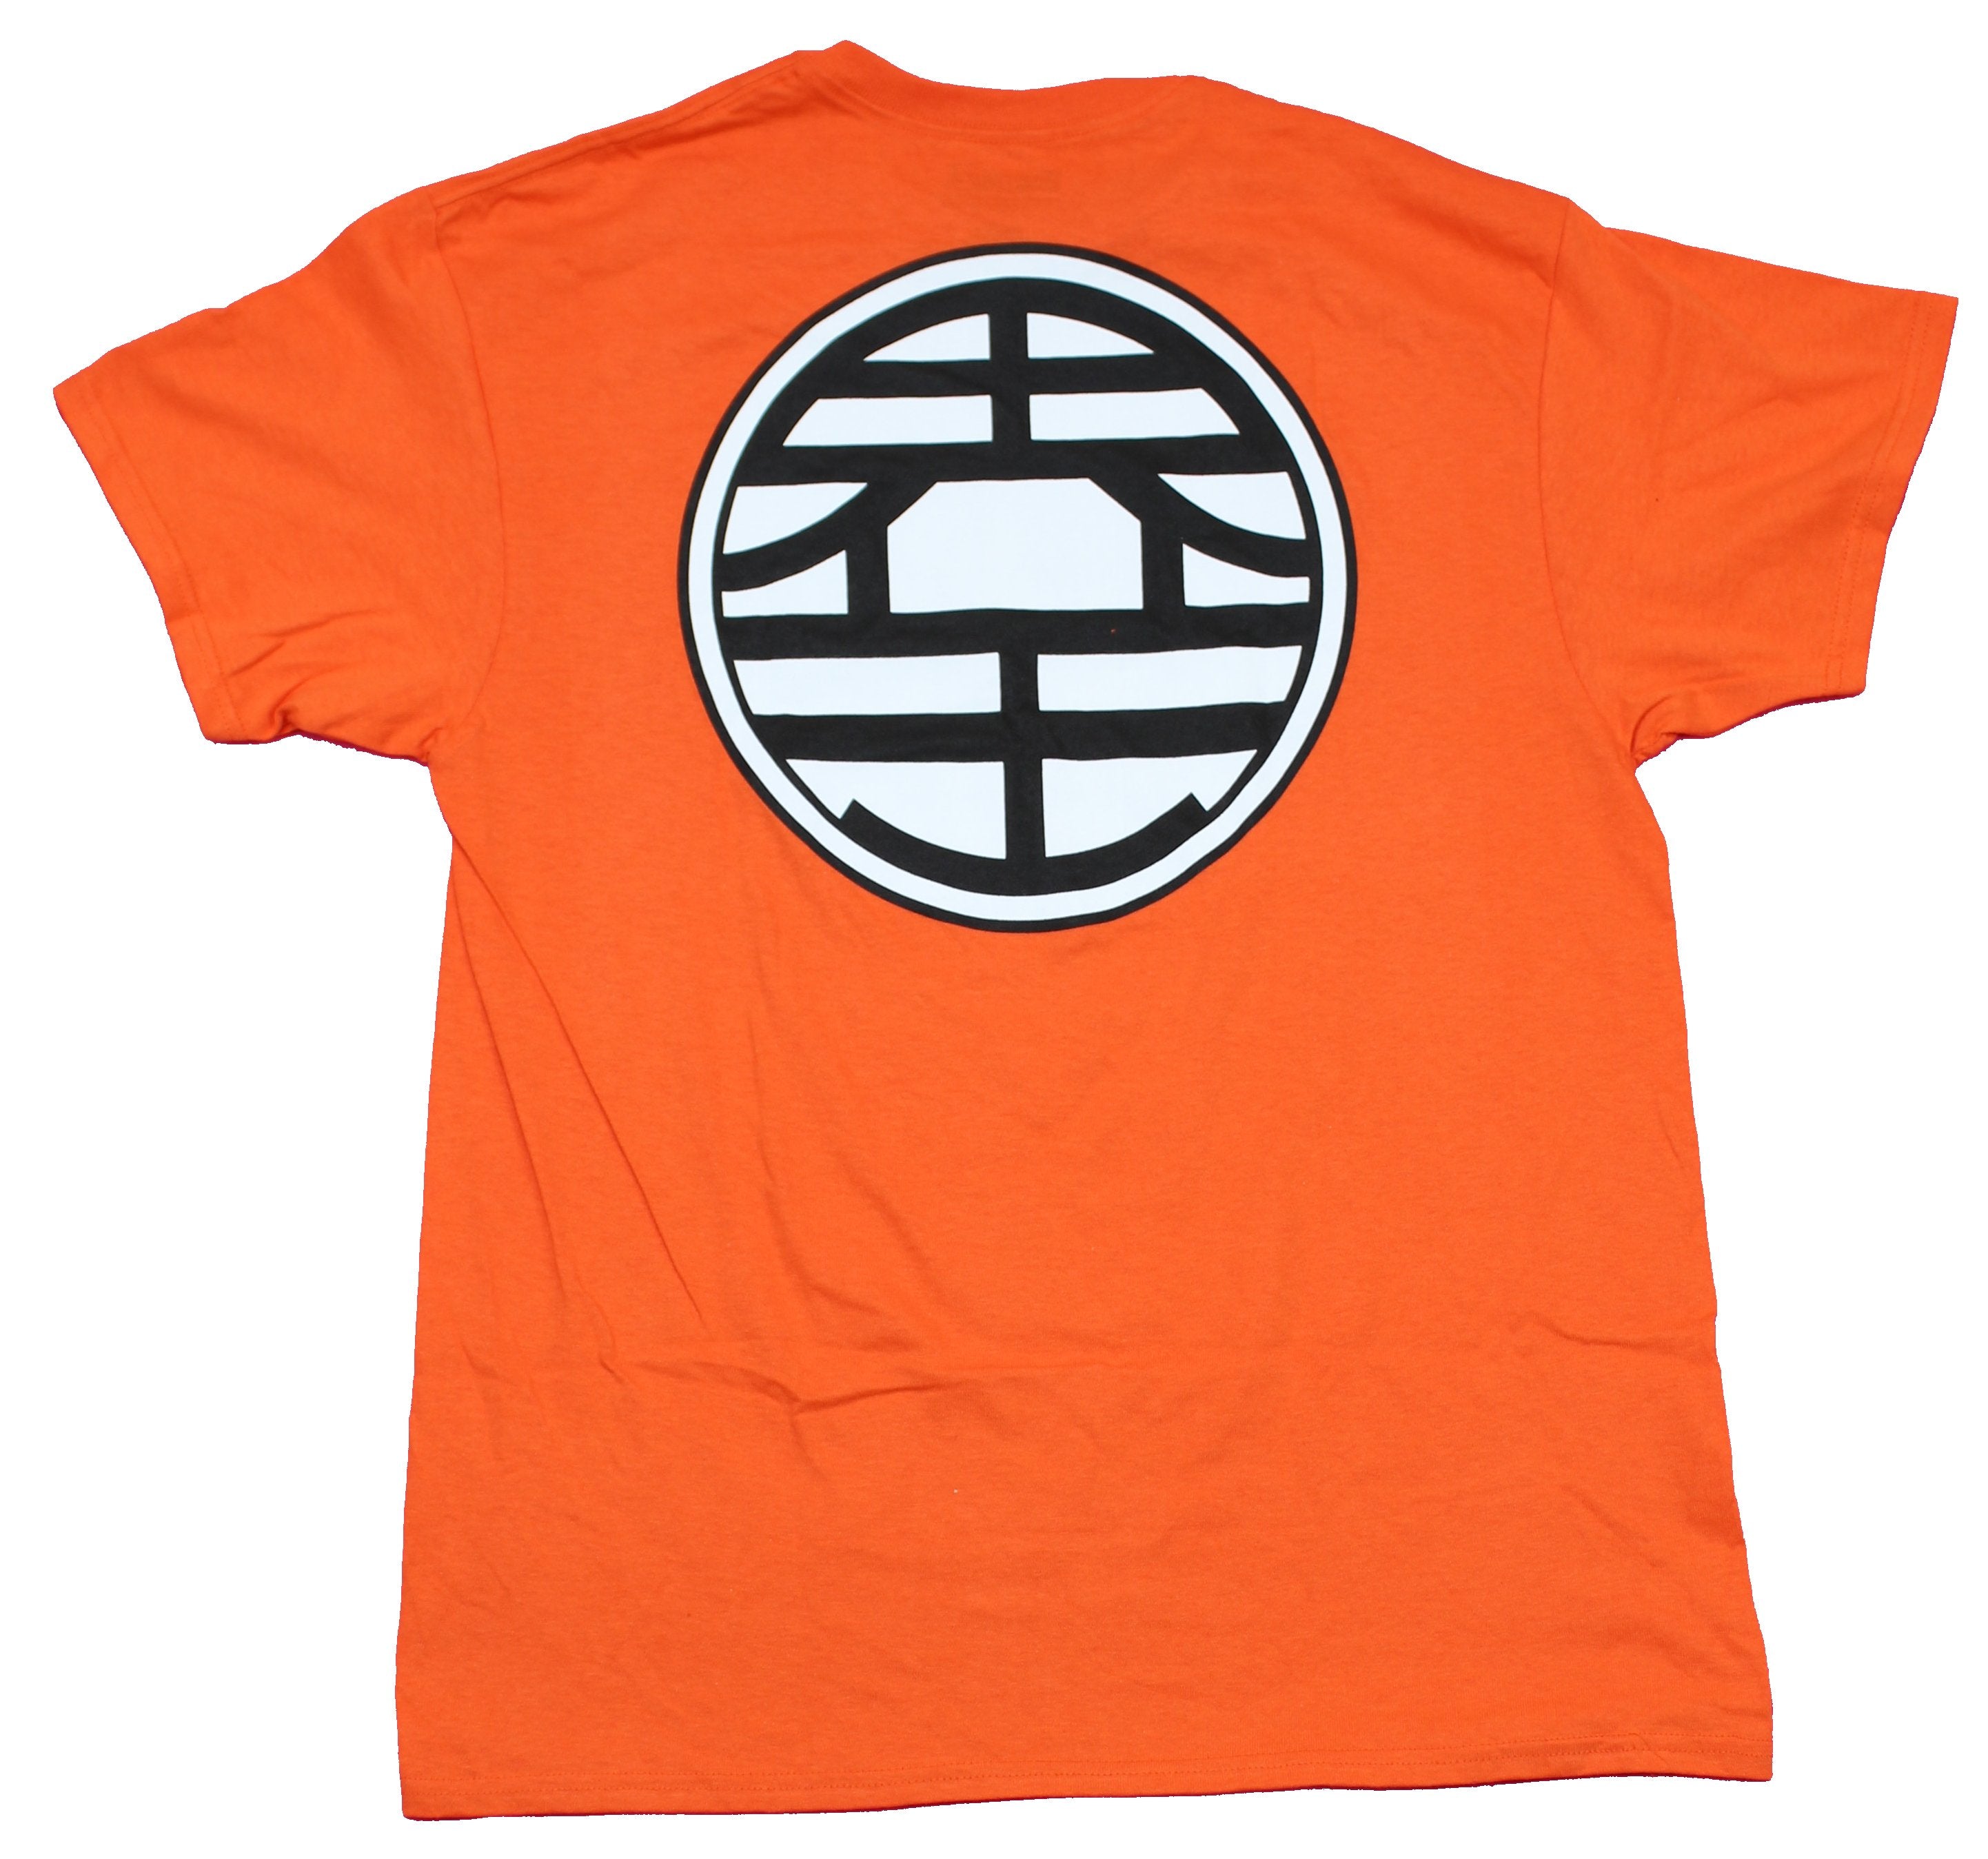 Dragon Ball Z Mens T-Shirt - Goku Costume Style Small Lapel Large Back